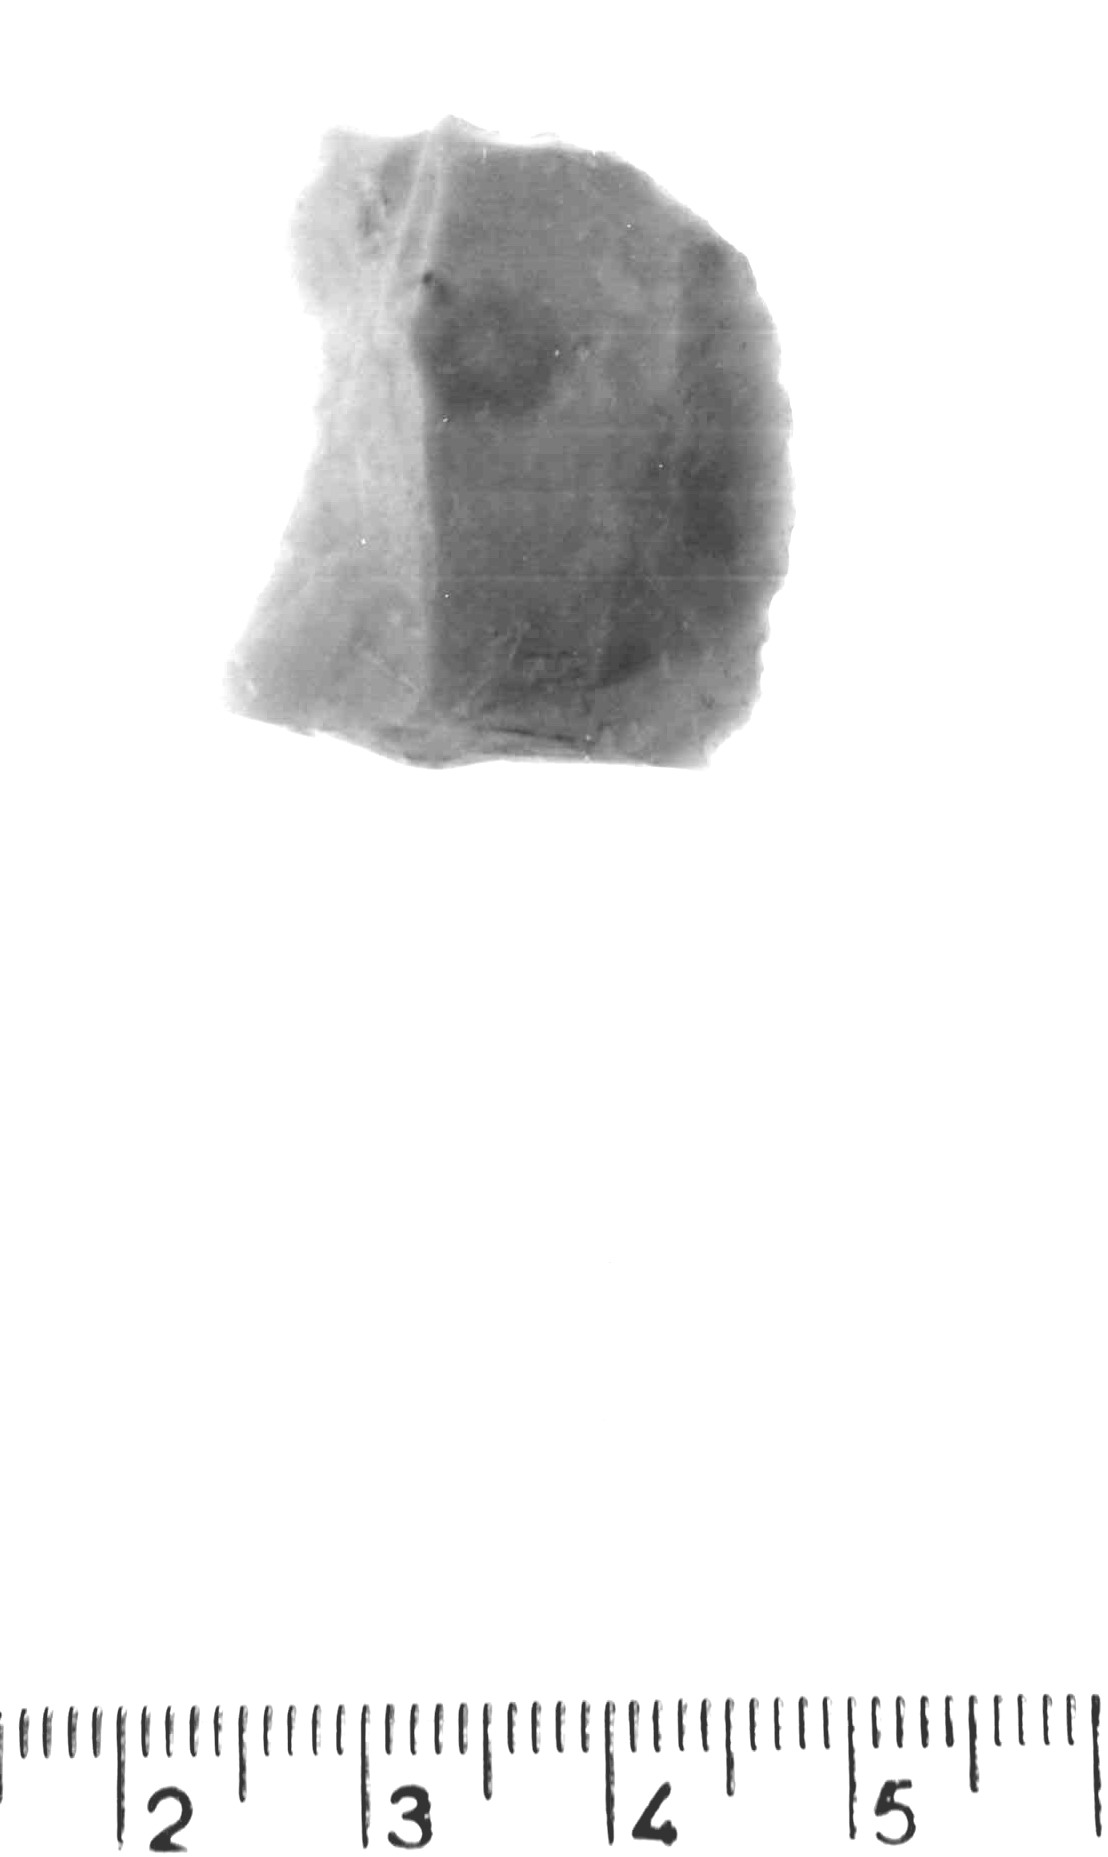 grattatoio - epigravettiano antico (paleolitico superiore)